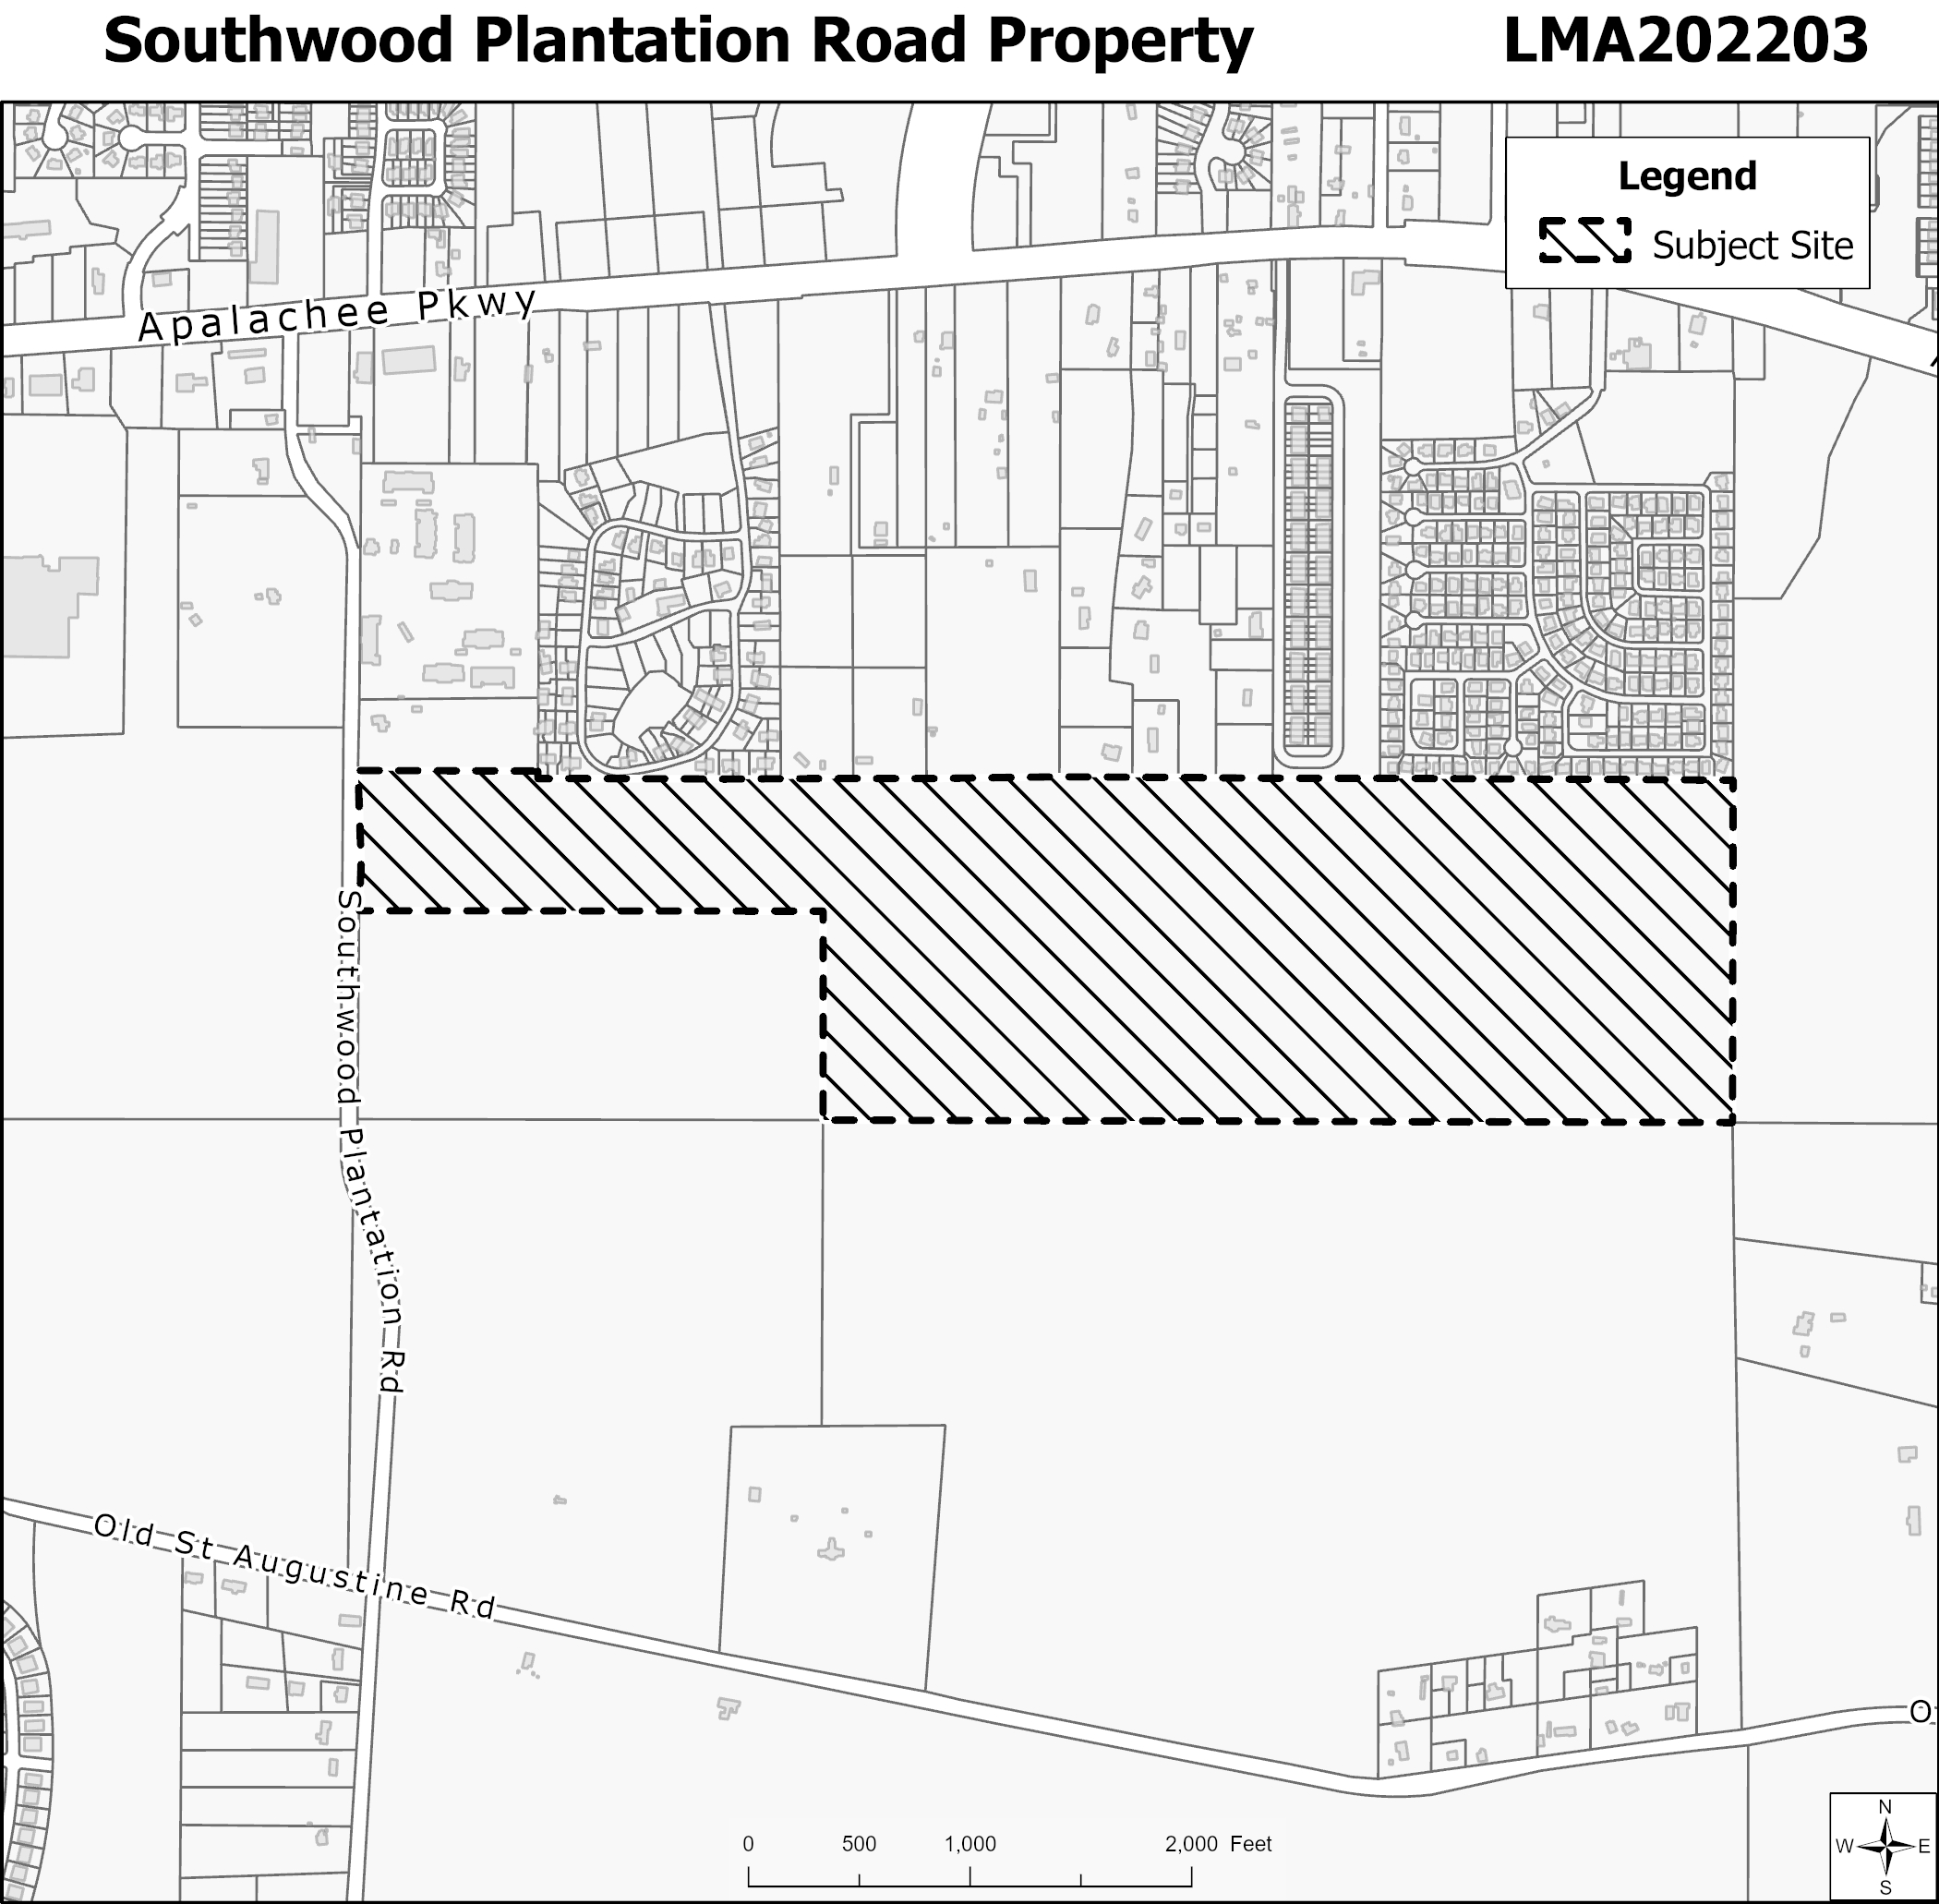 Southwood Plantation Road (LMA202203)